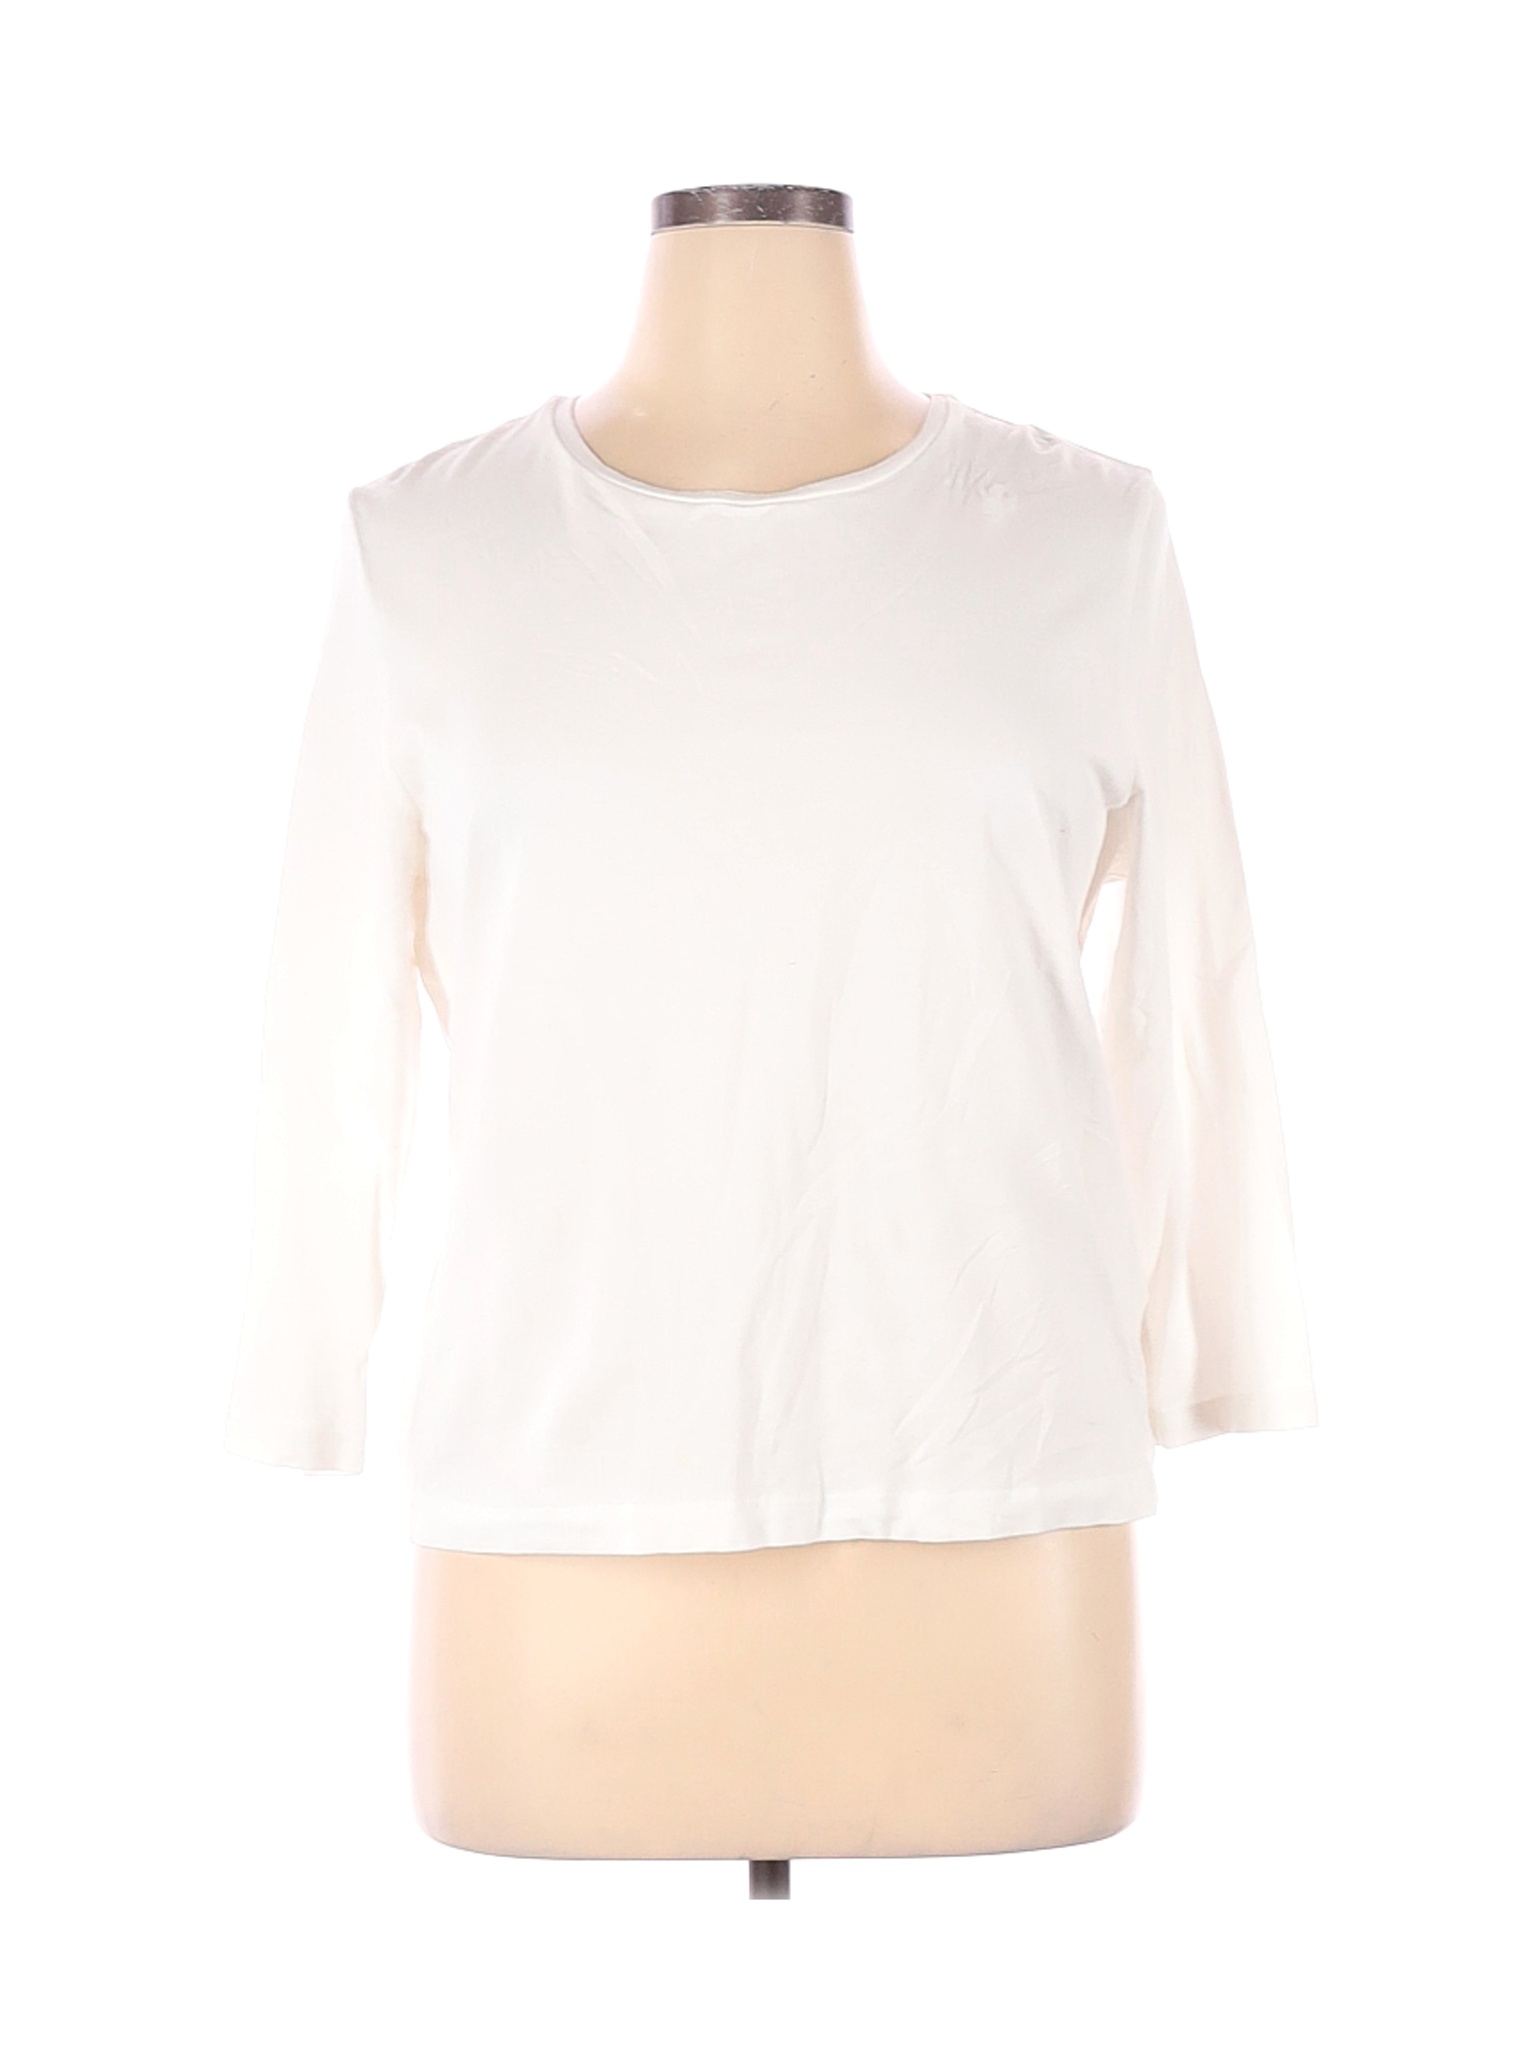 Chico's Women White Long Sleeve T-Shirt XL | eBay